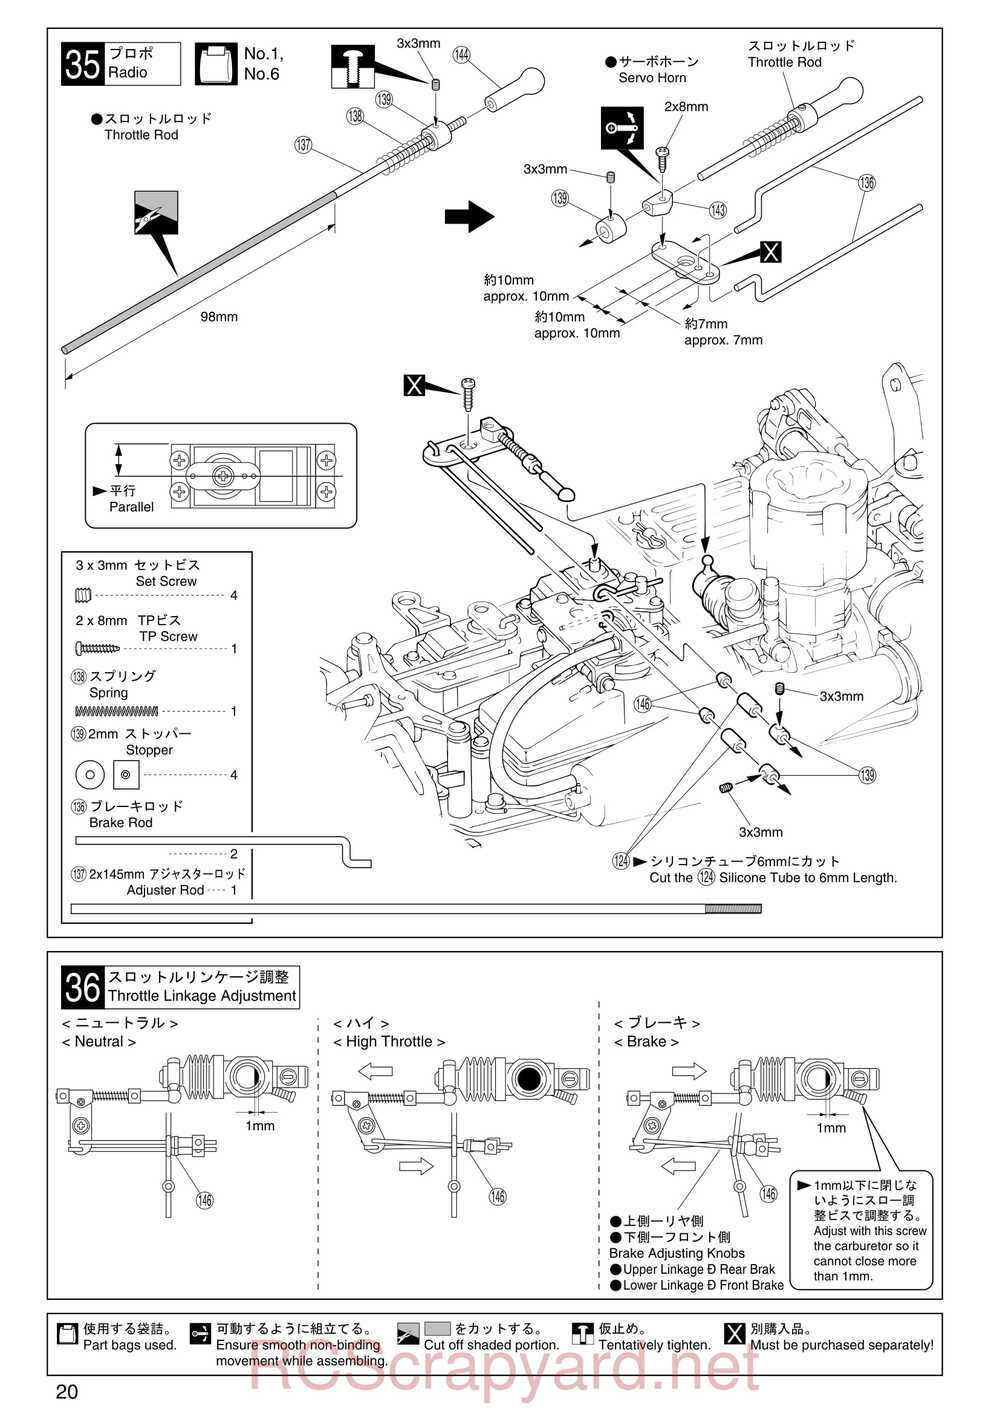 Kyosho - 31192 - Inferno-MP-7-5 Sports - Manual - Page 20